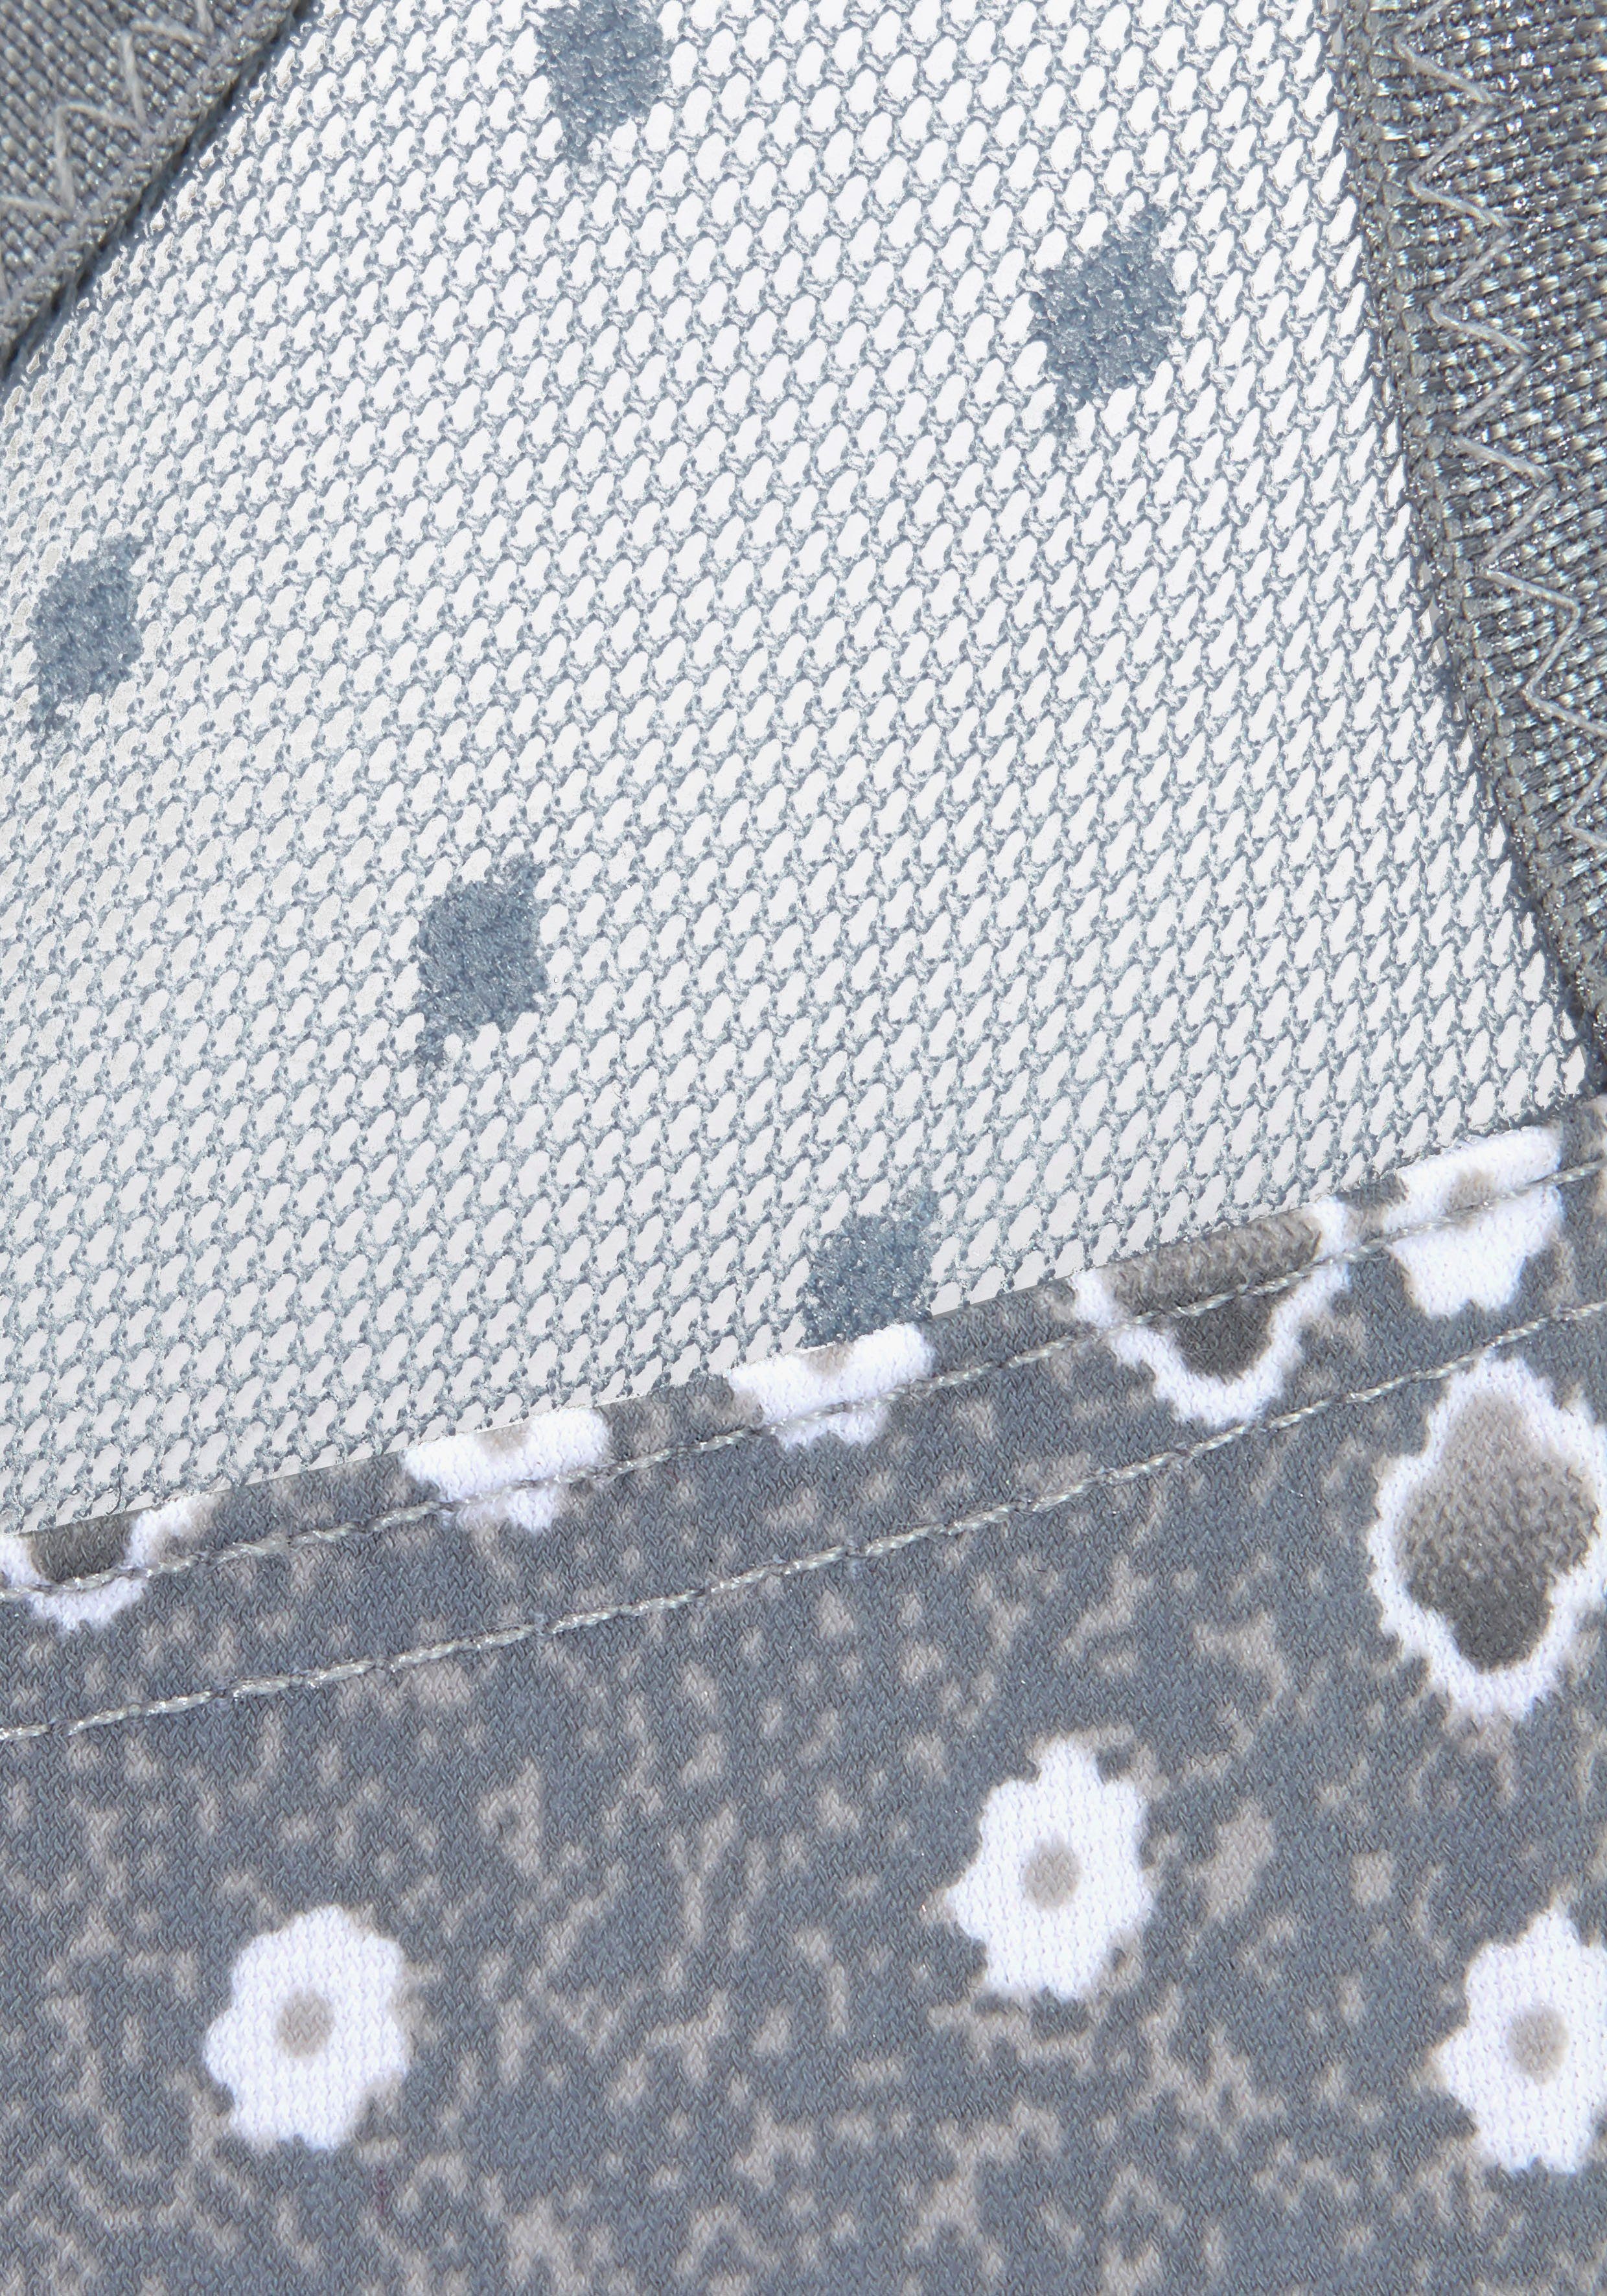 Nuance Minimizer-BH grau-bedruckt Bügel leicht Obercup, Basic und im Tüll transparentem Dessous mit